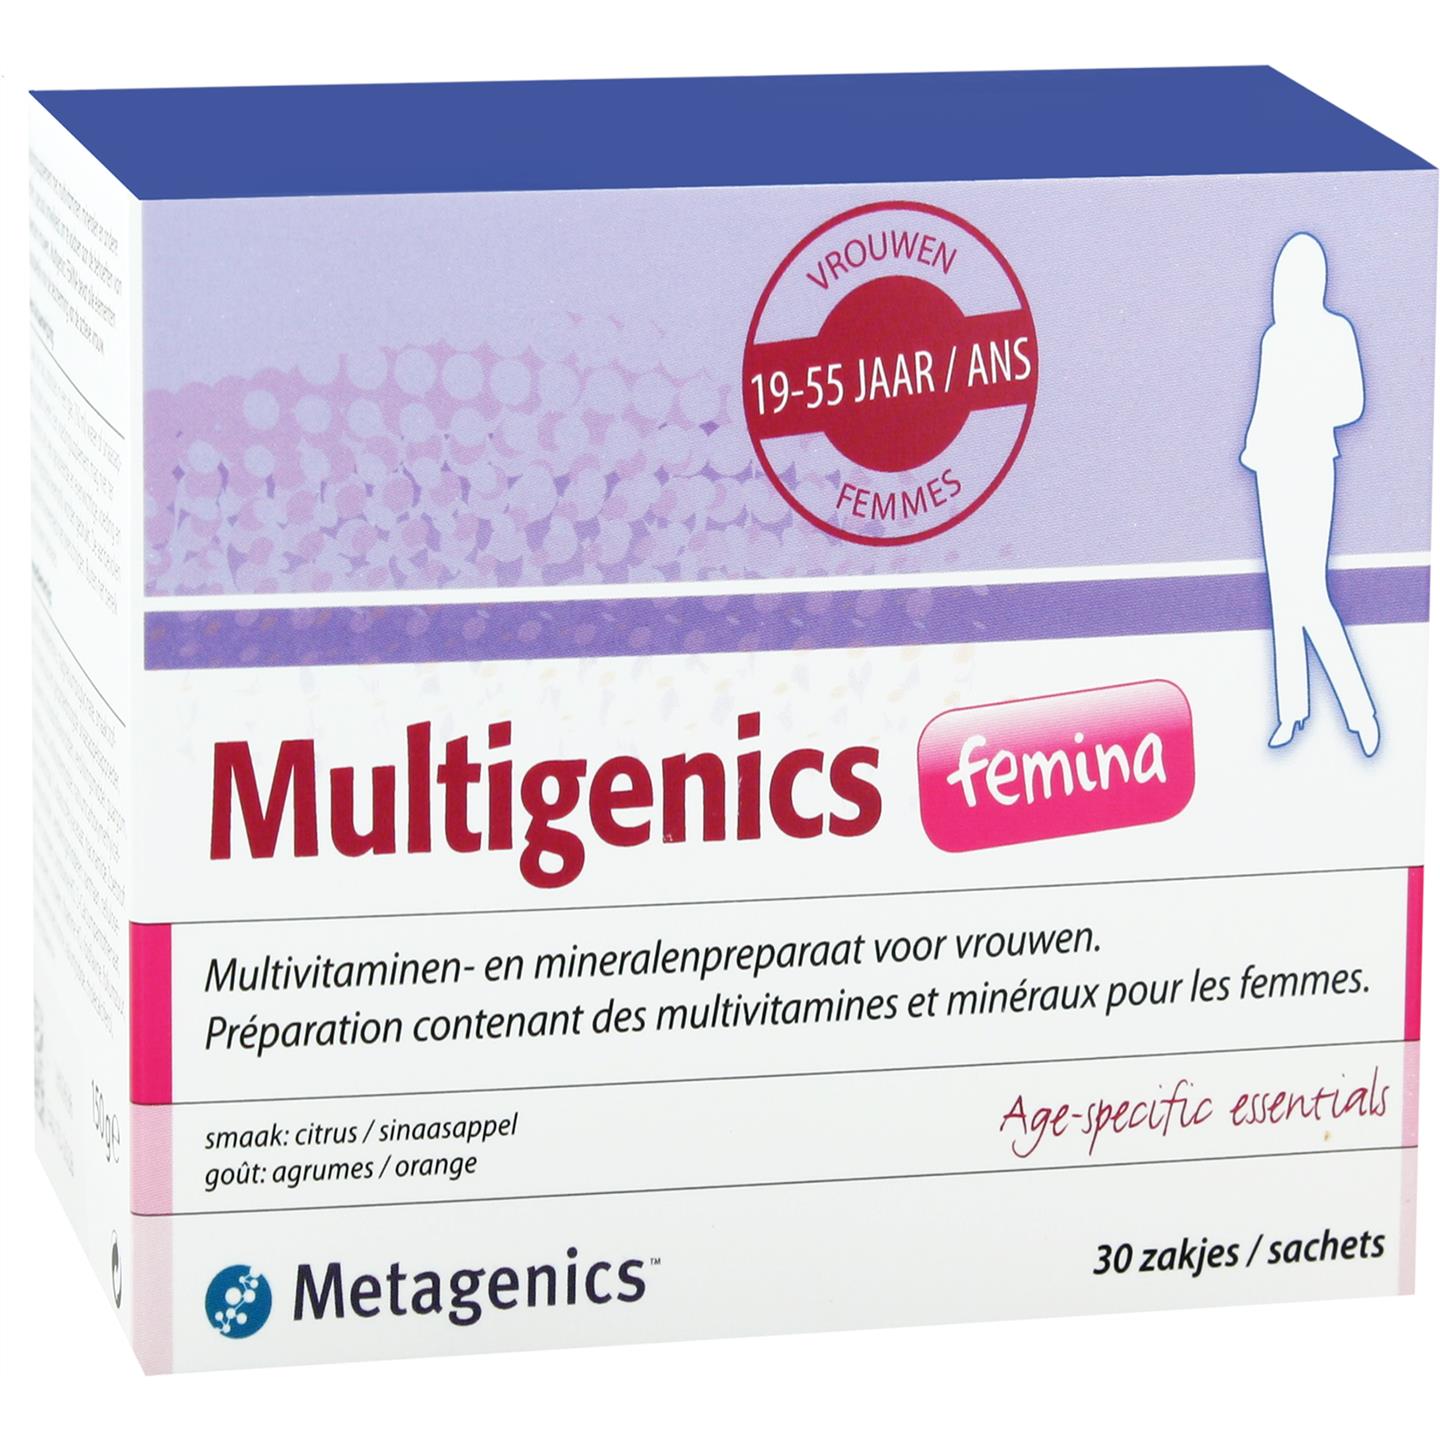 Multigenics femina